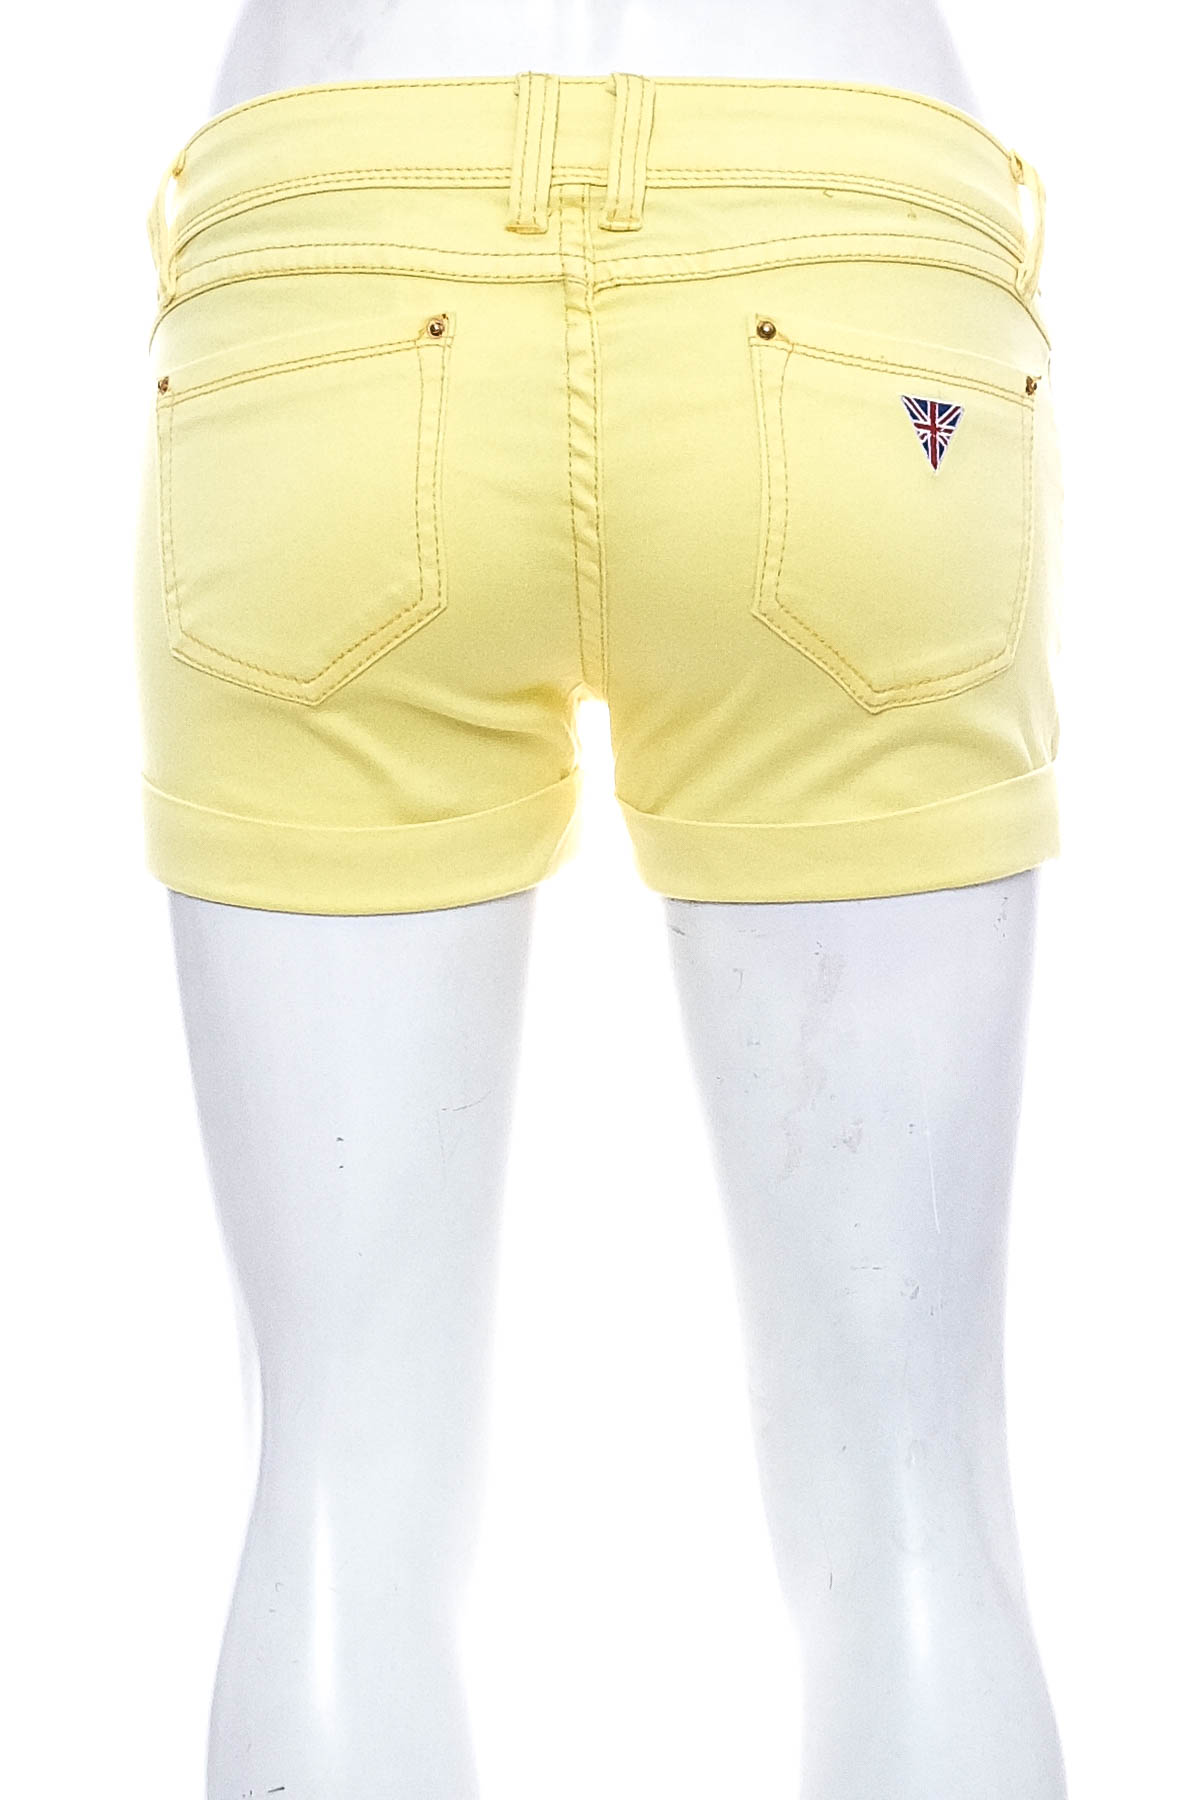 Female shorts - R.J onaca - 1